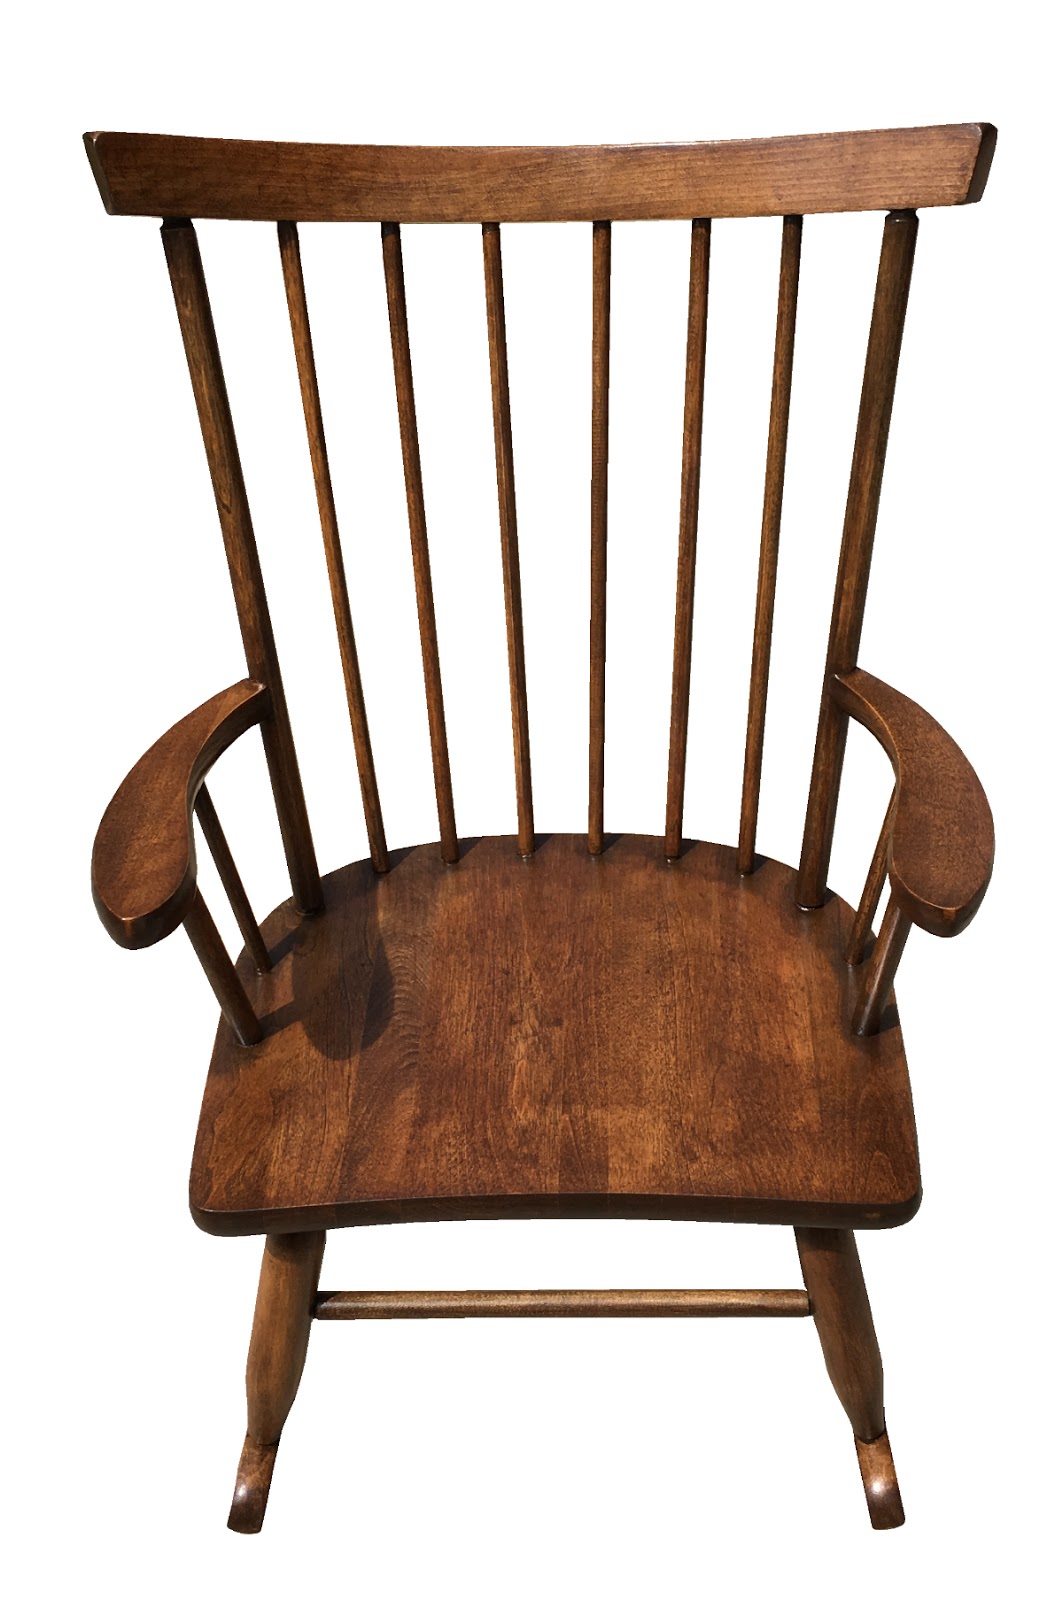 finale furniture restoration services llc tiny rocking chair